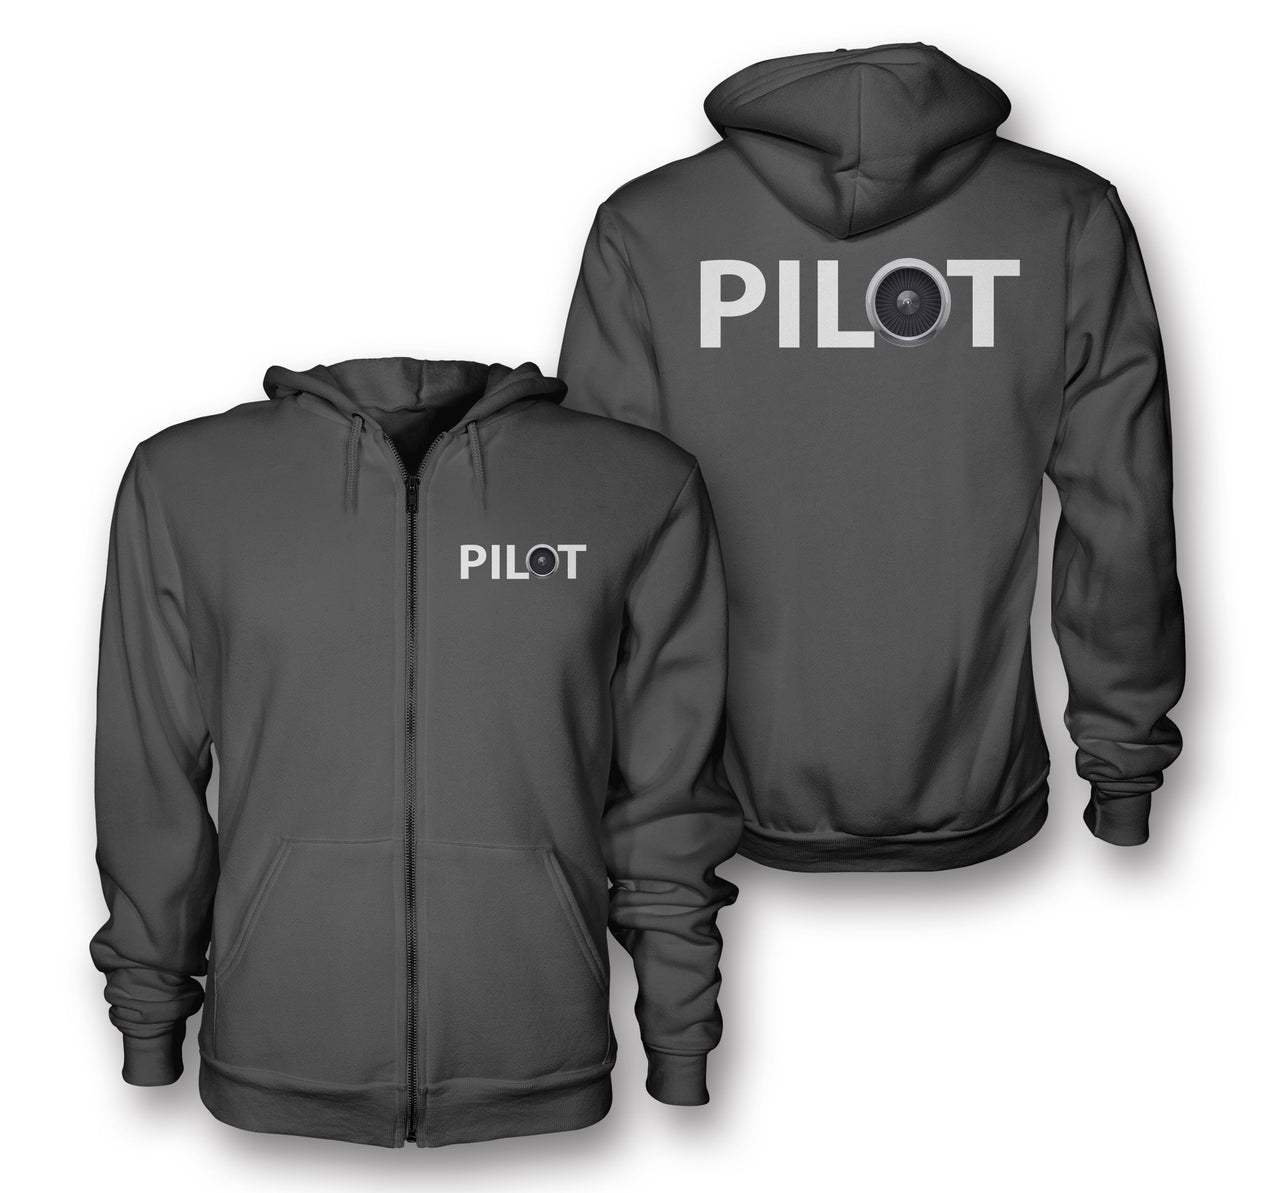 Pilot & Jet Engine Designed Zipped Hoodies